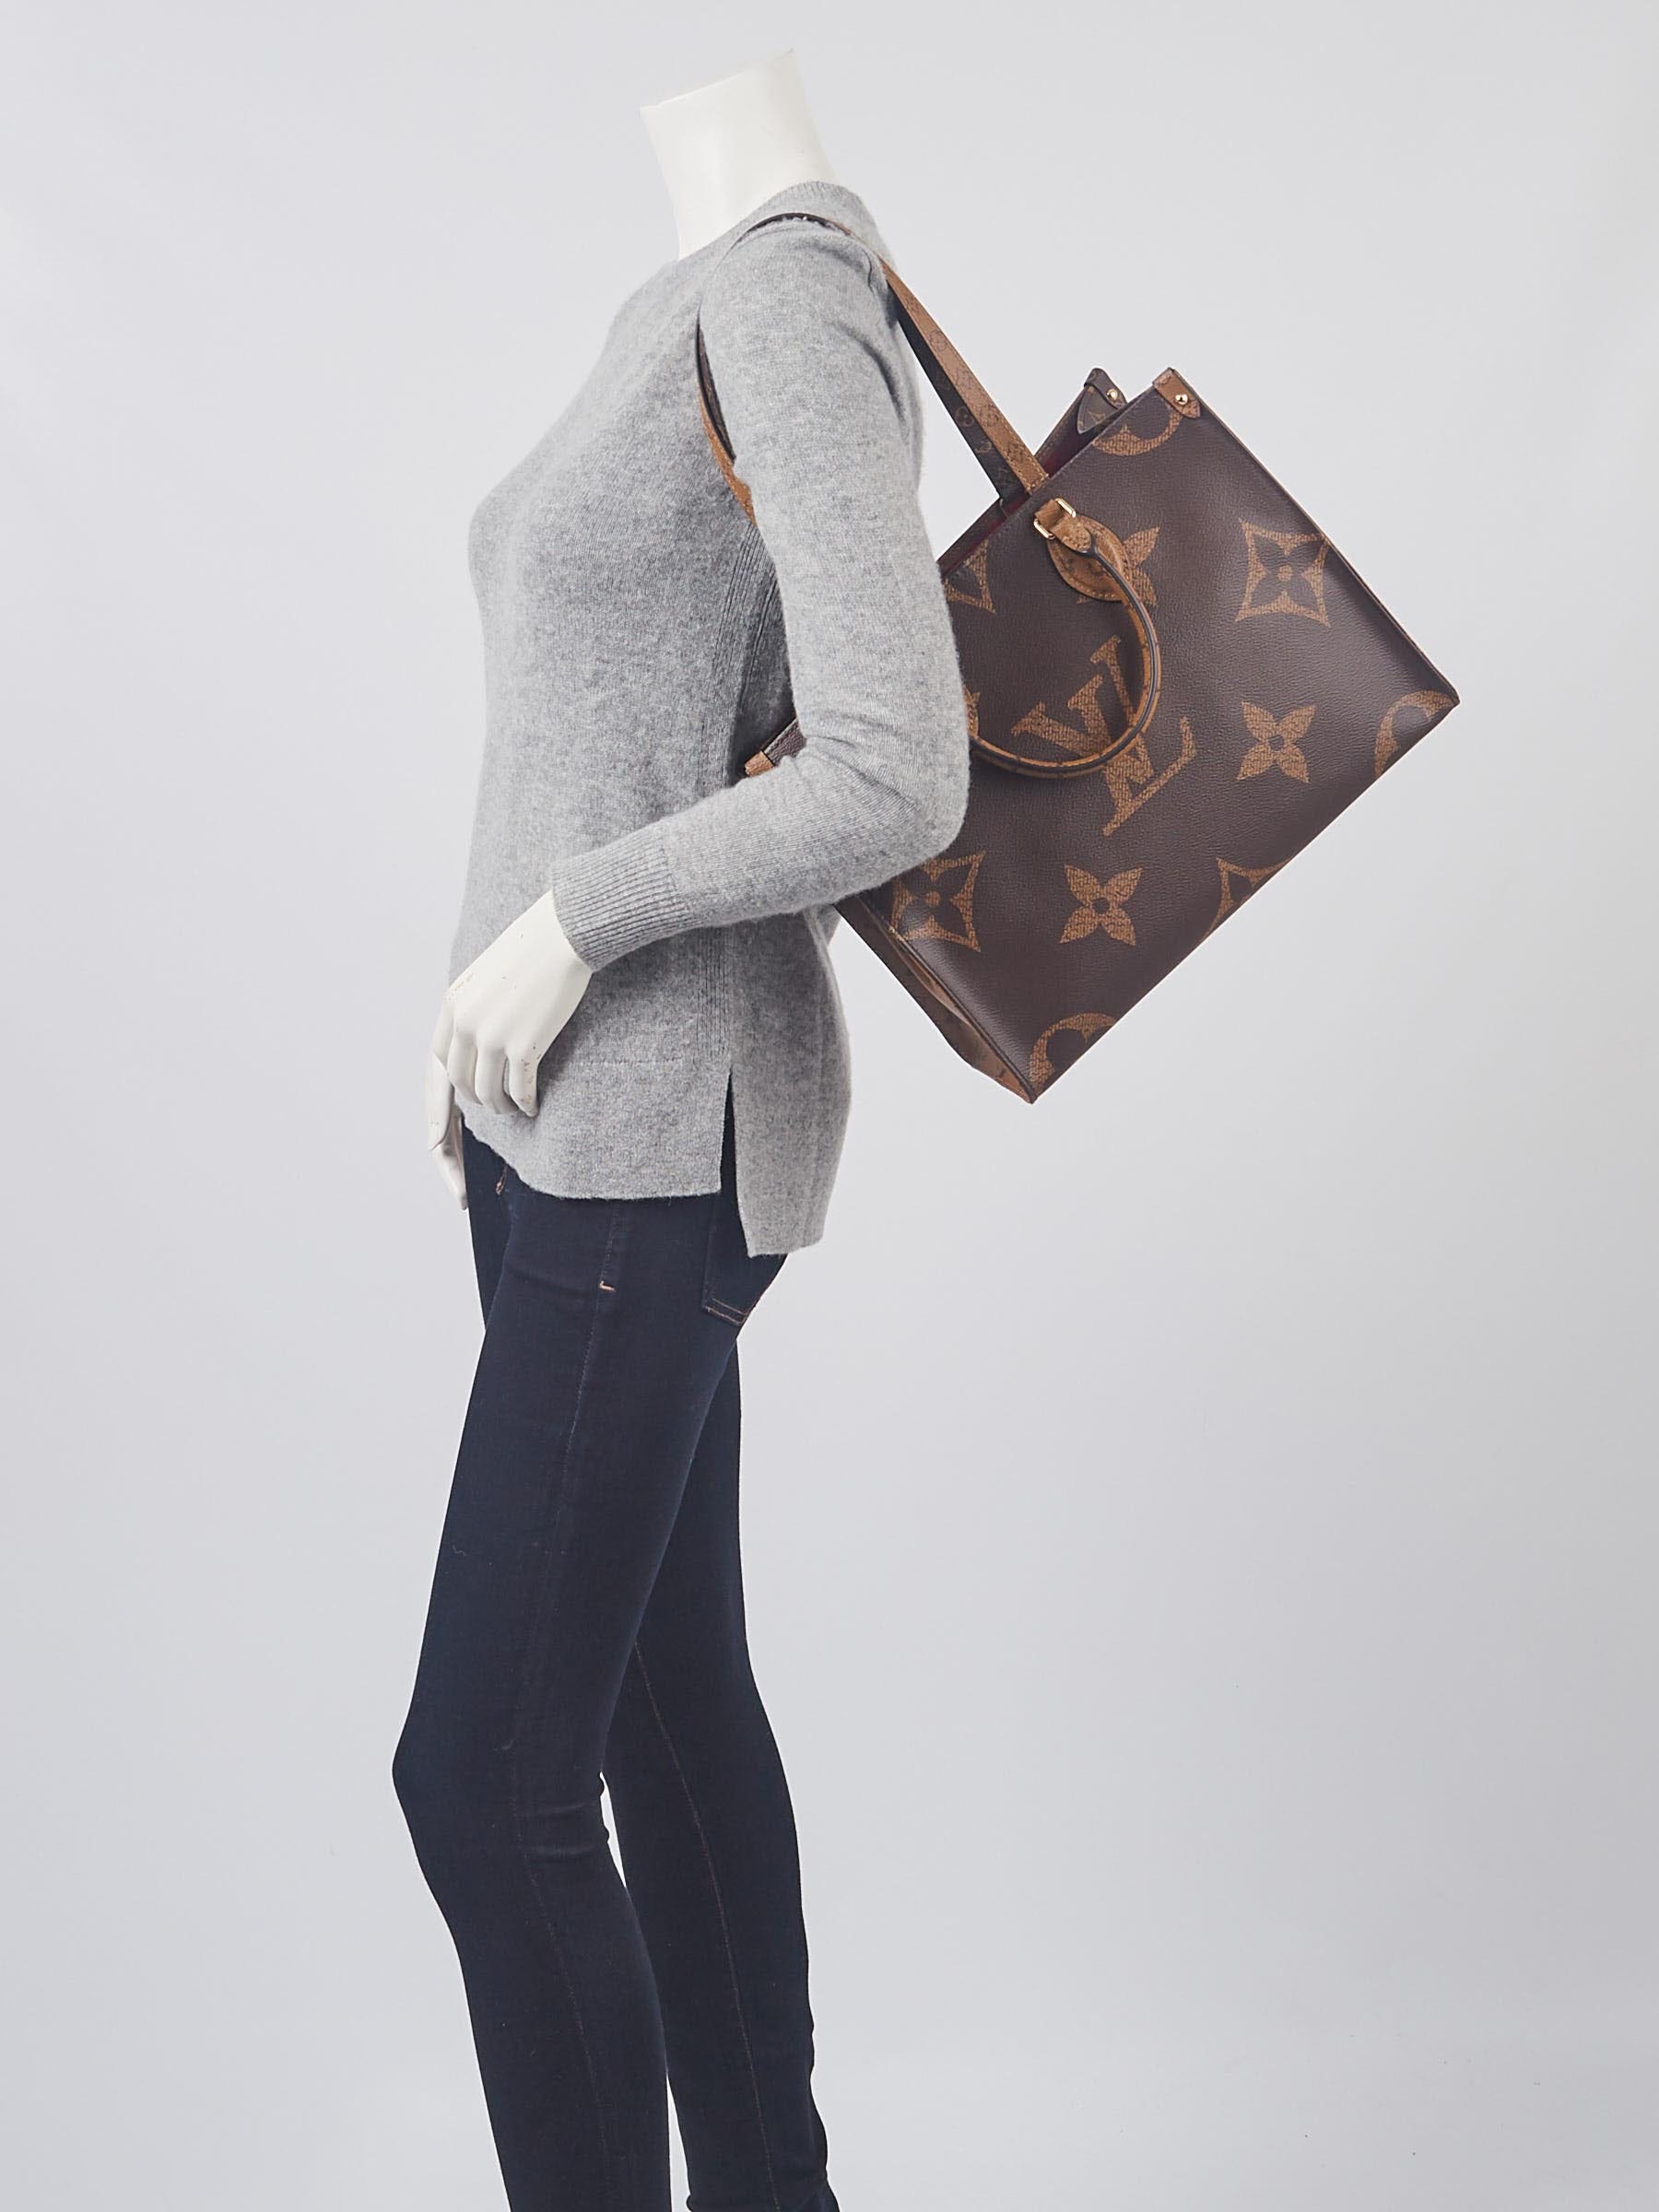 Louis Vuitton OnTheGo MM Monogram Giant Reverse